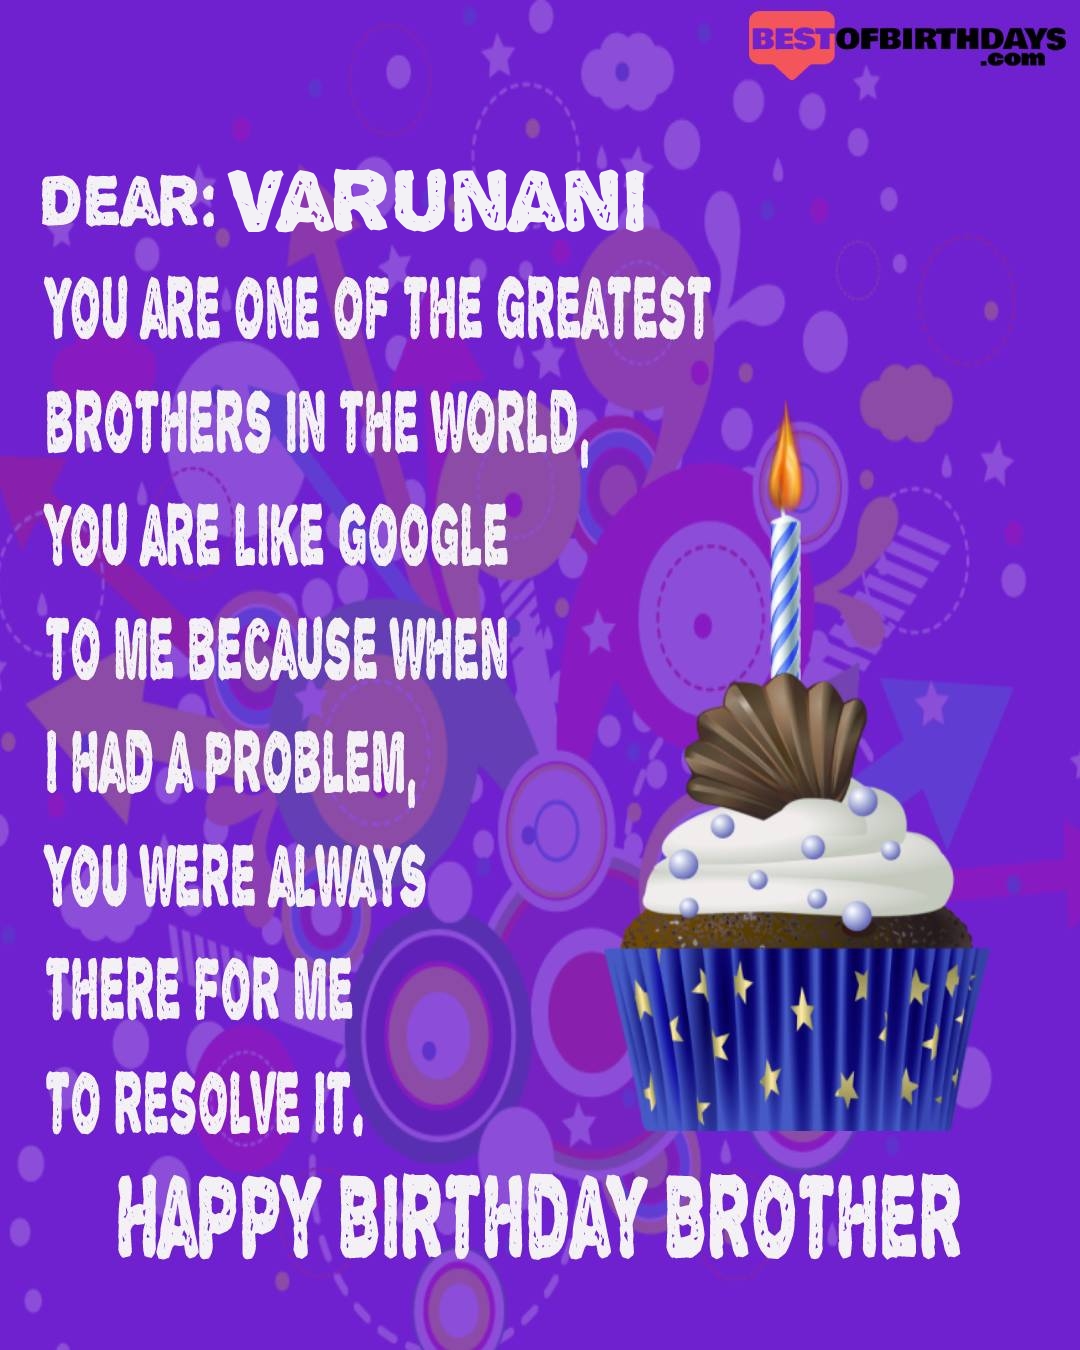 Happy birthday varunani bhai brother bro